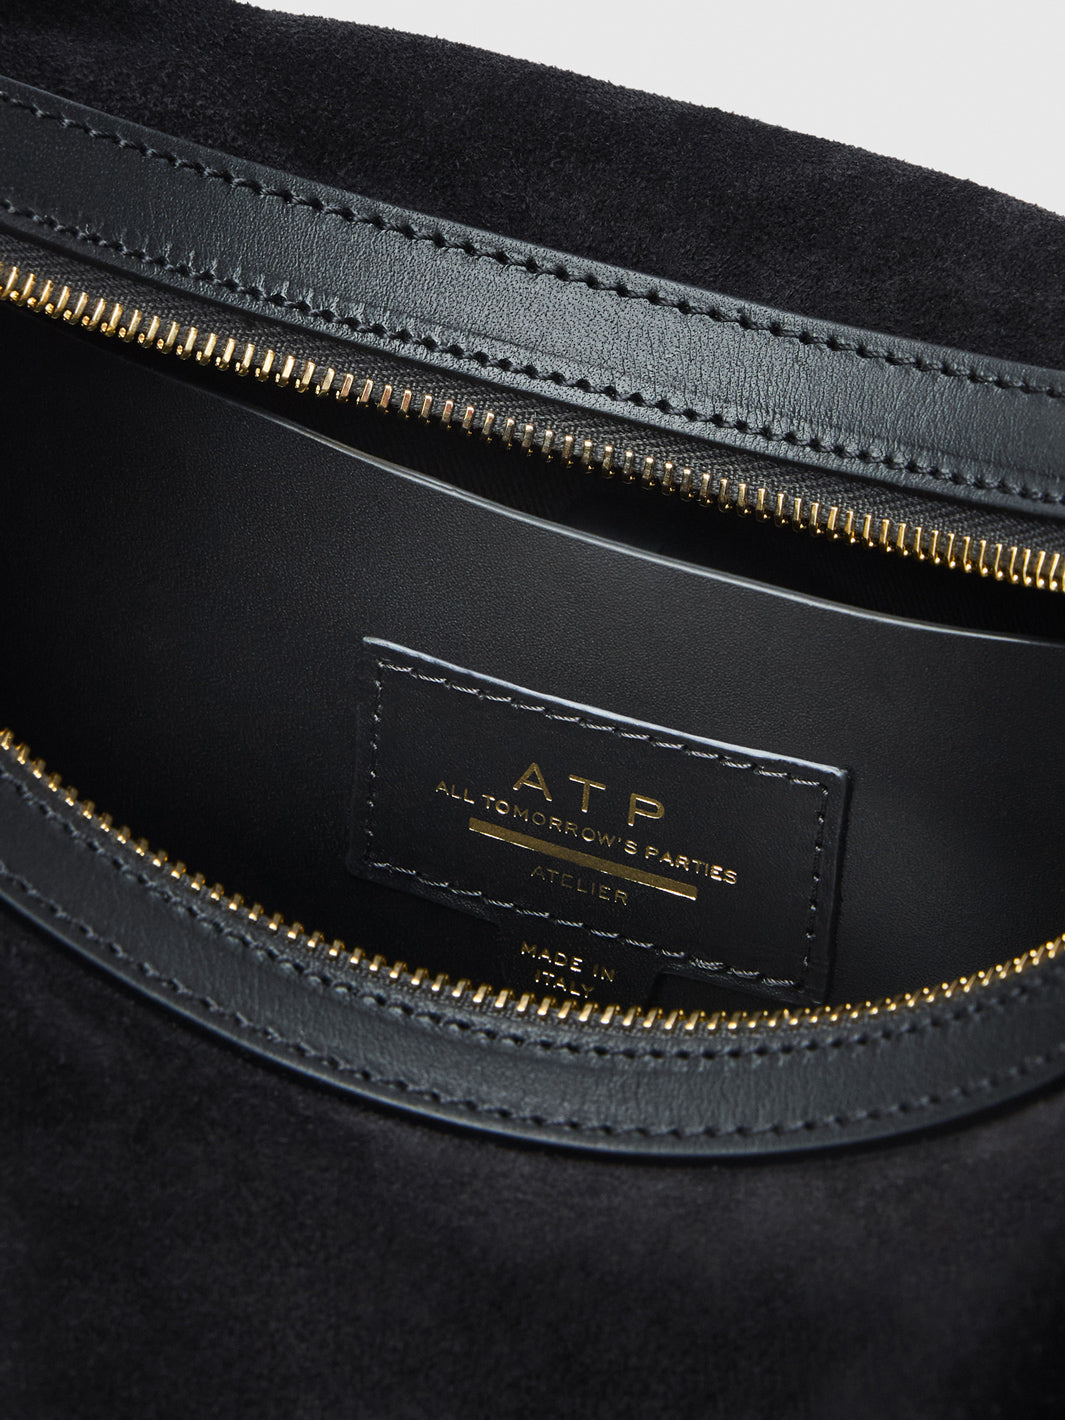 Potenza Black Suede/Leather Large hobo bag